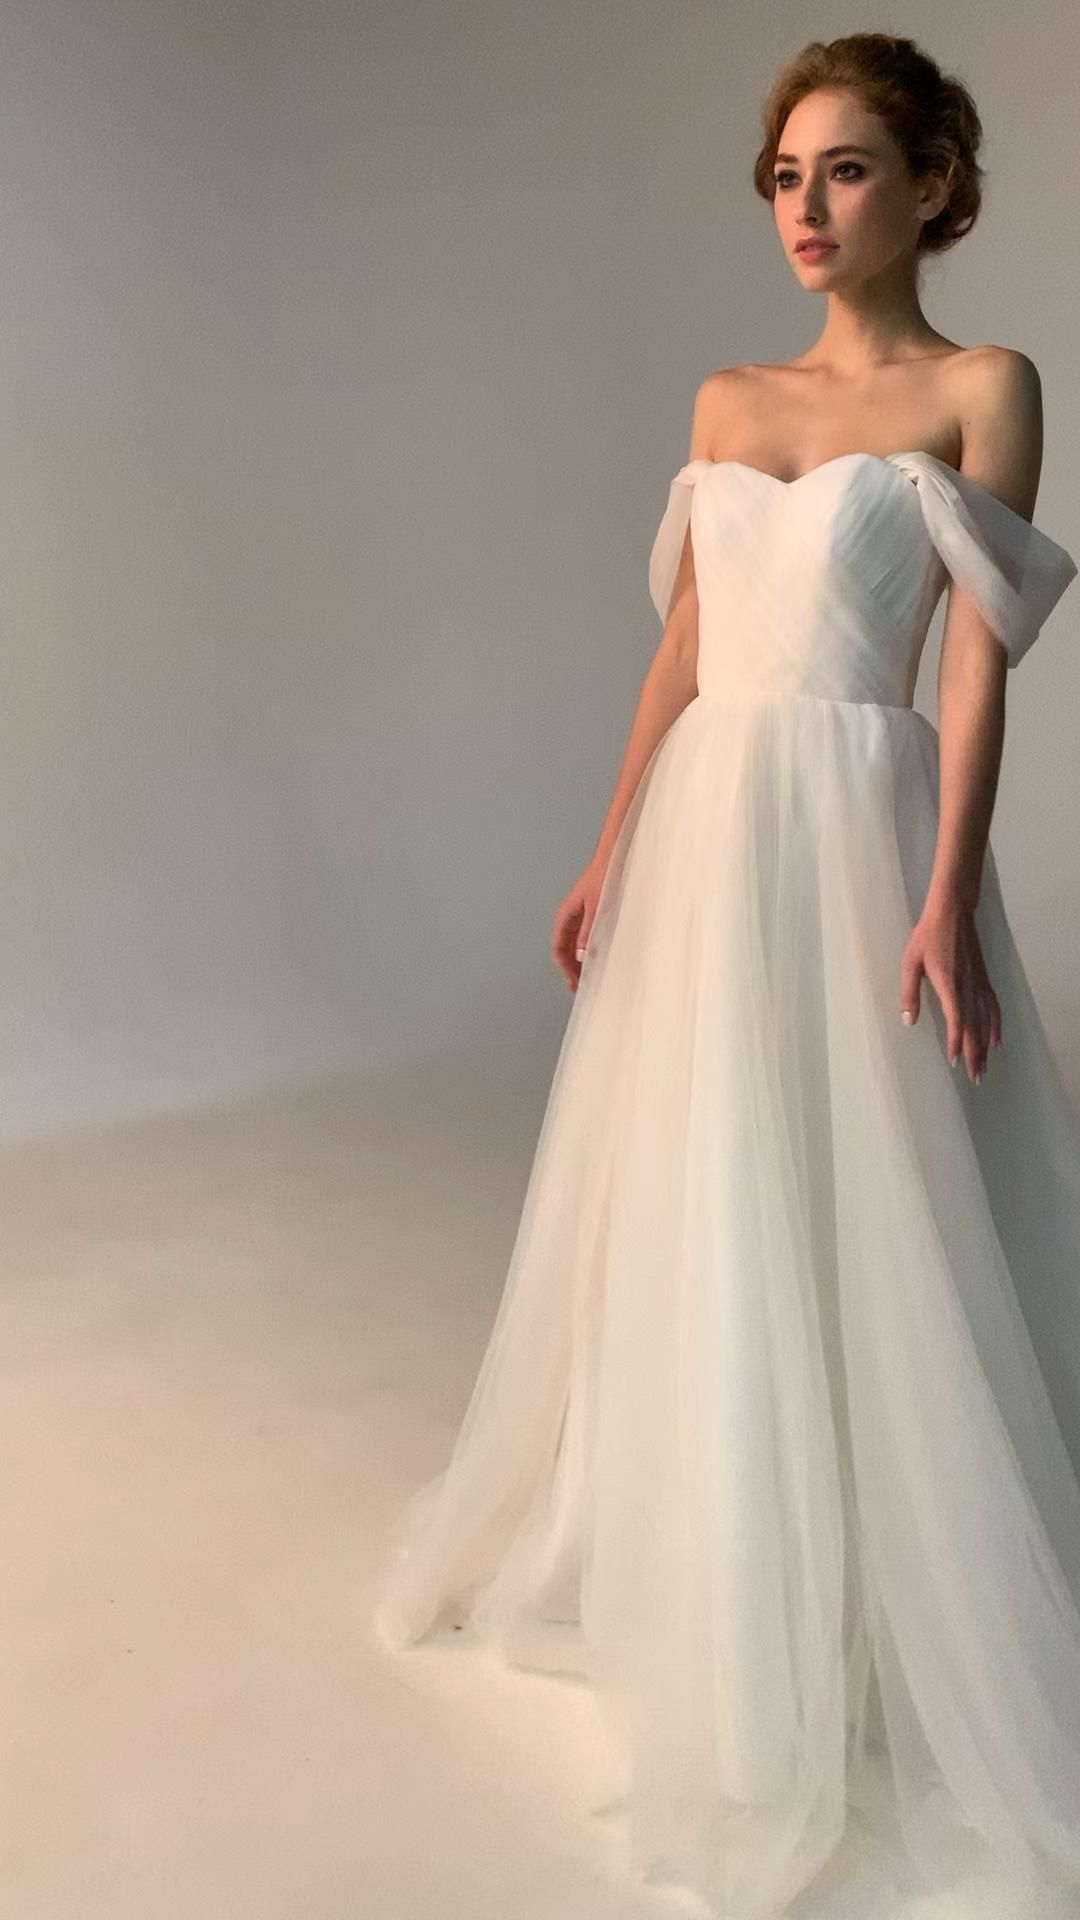 19 dress Silk the bride ideas